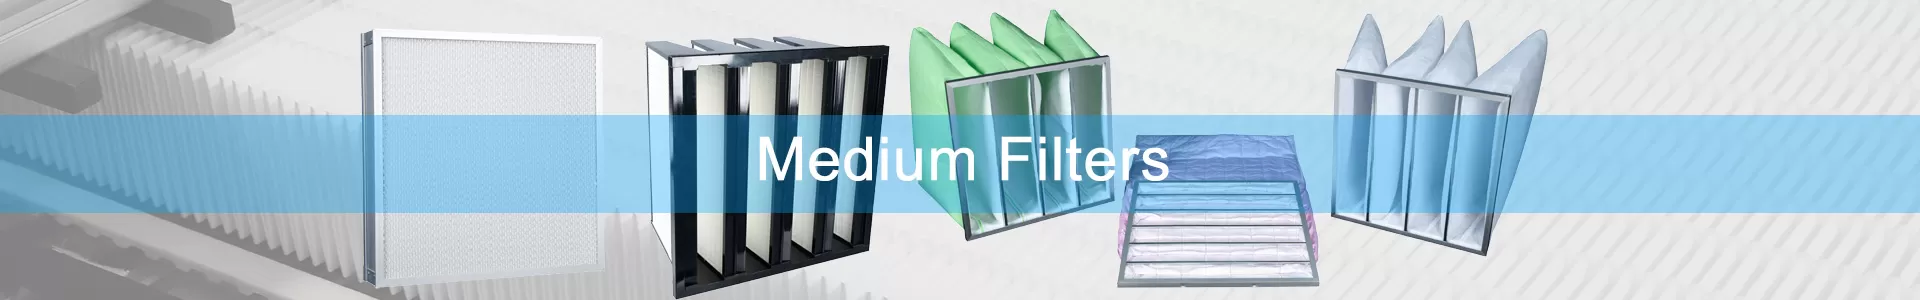 Medium Filters